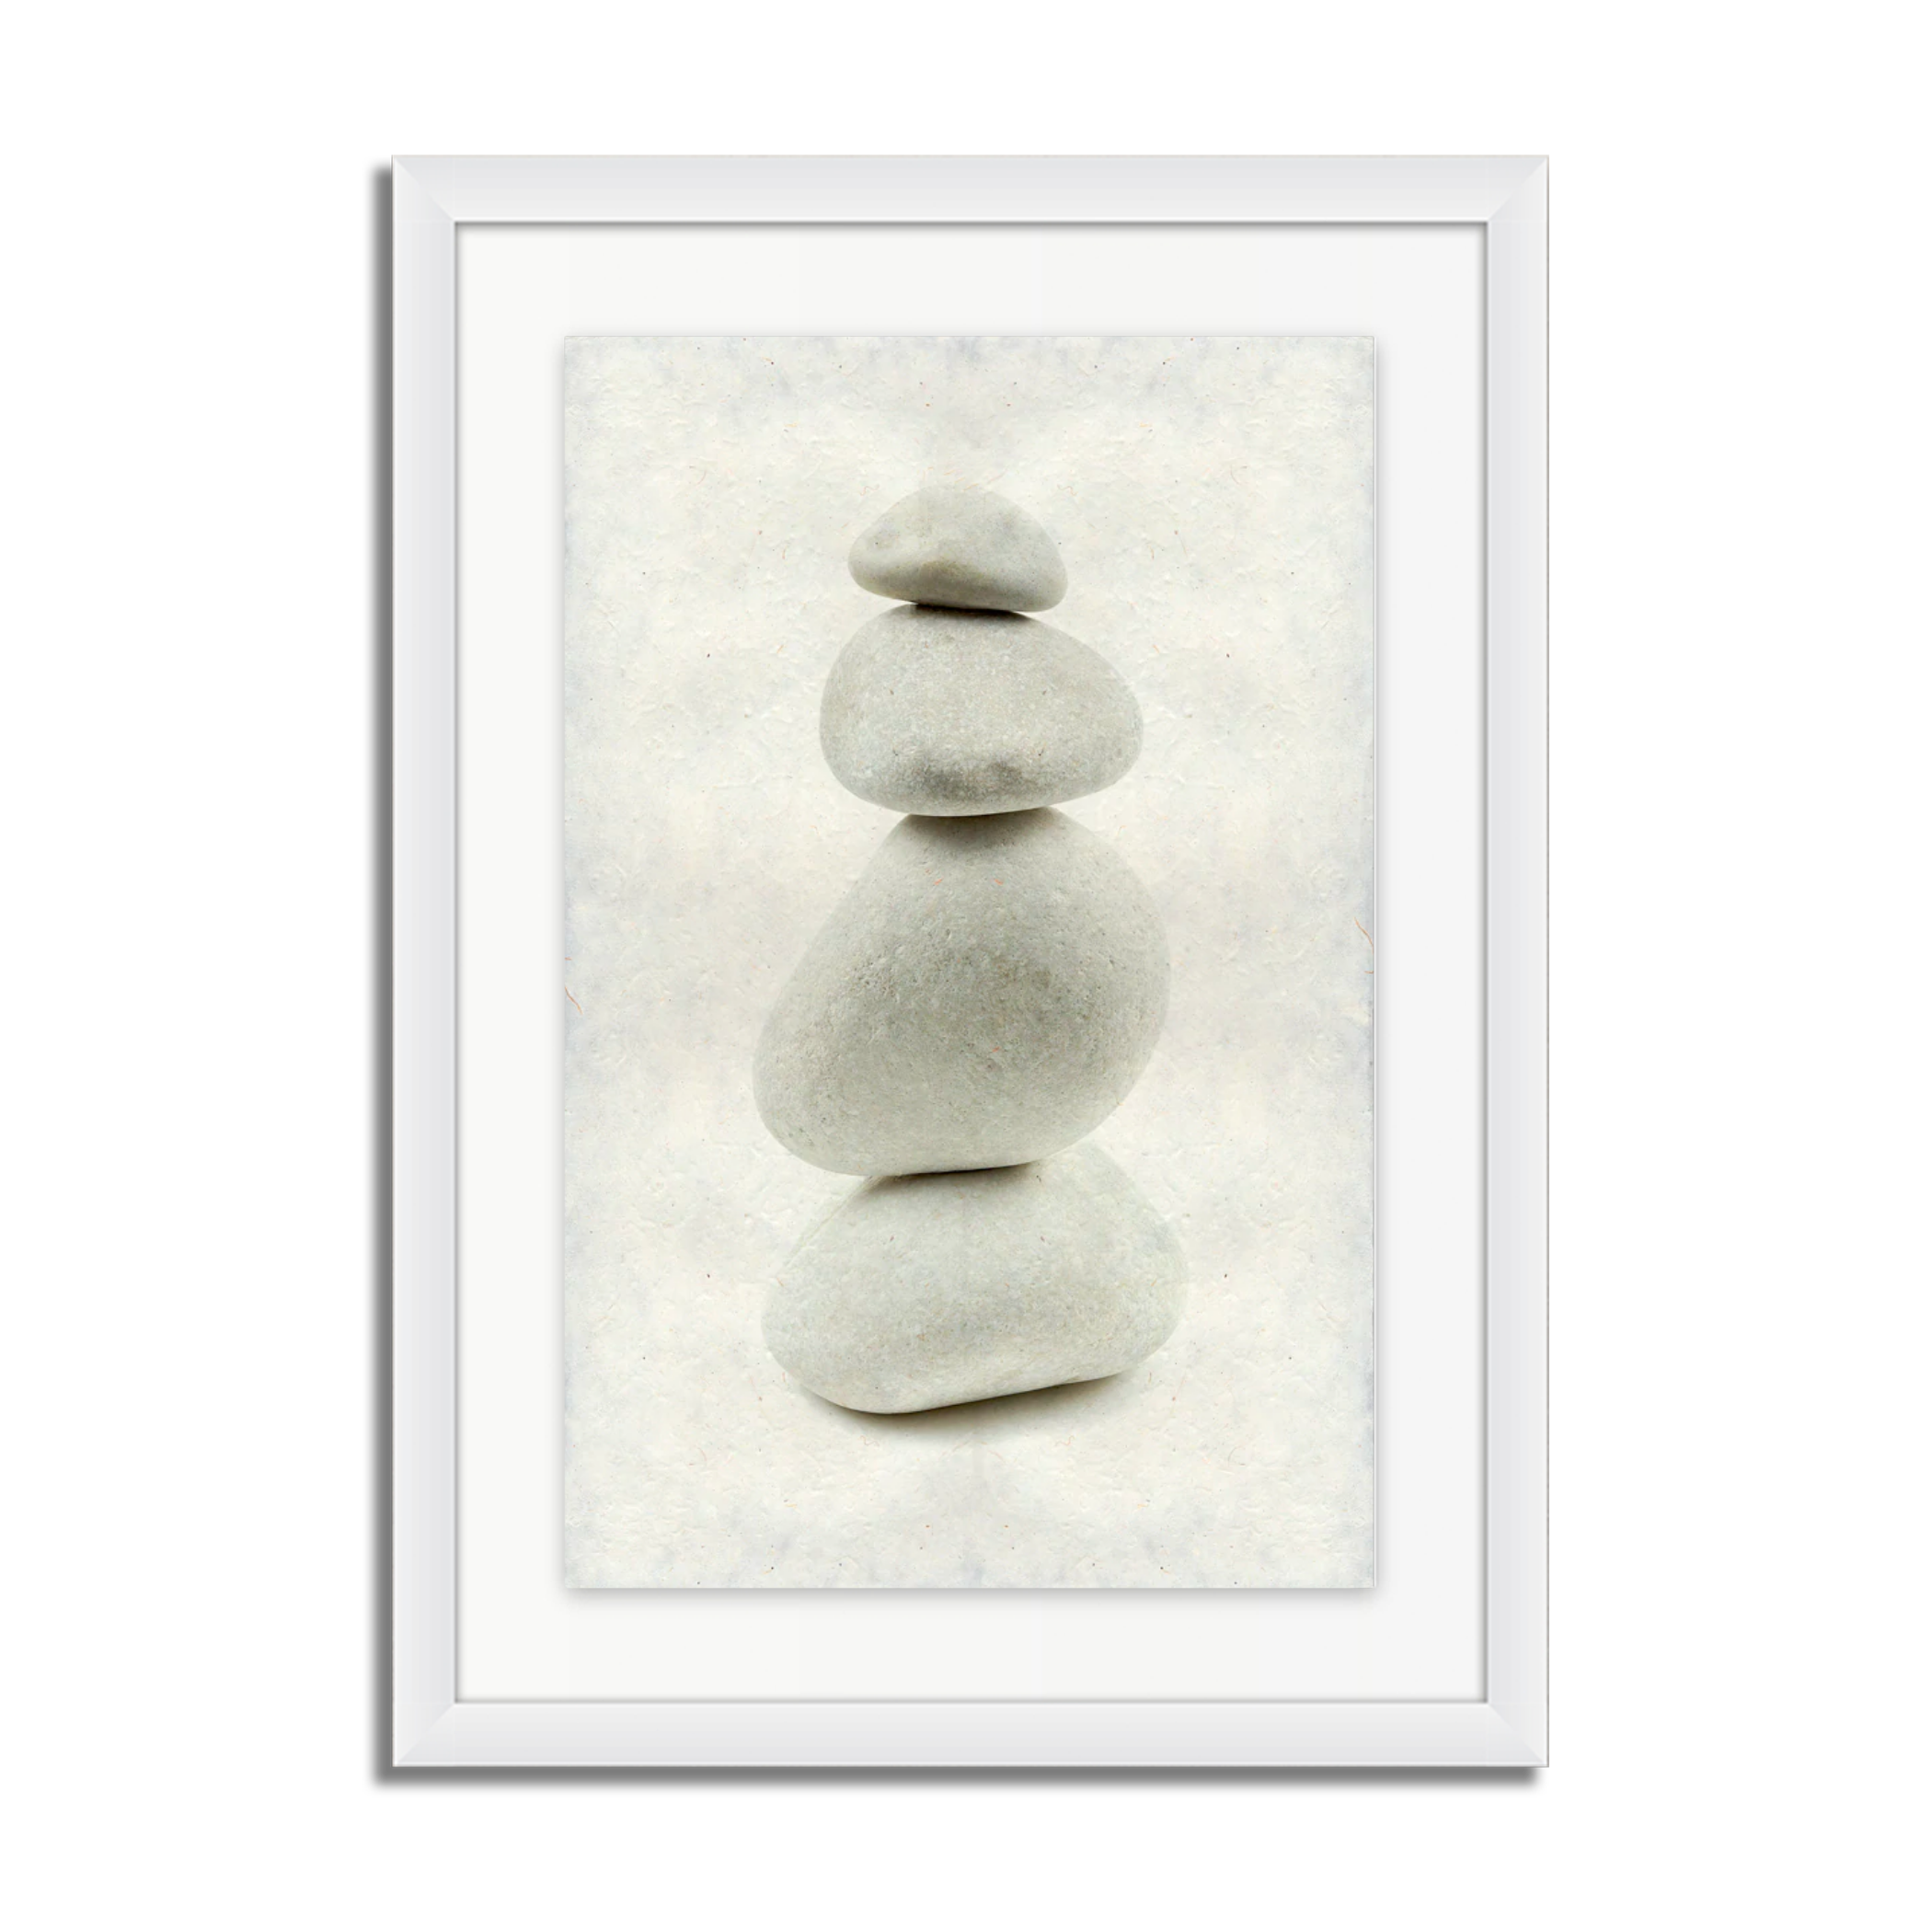 Balanced Stones #9